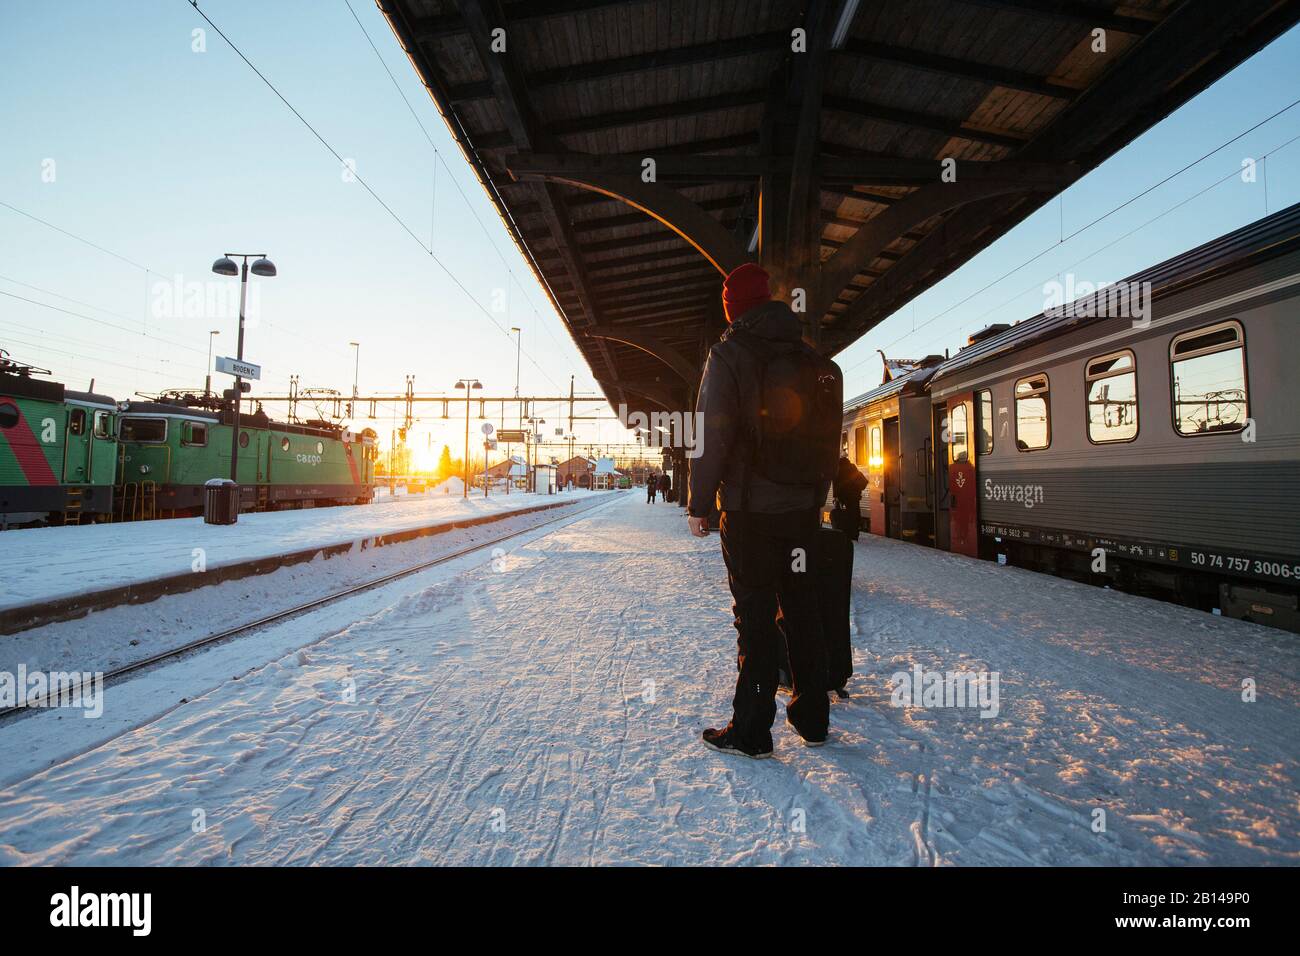 Railway station in Boden, Sweden Stock Photo